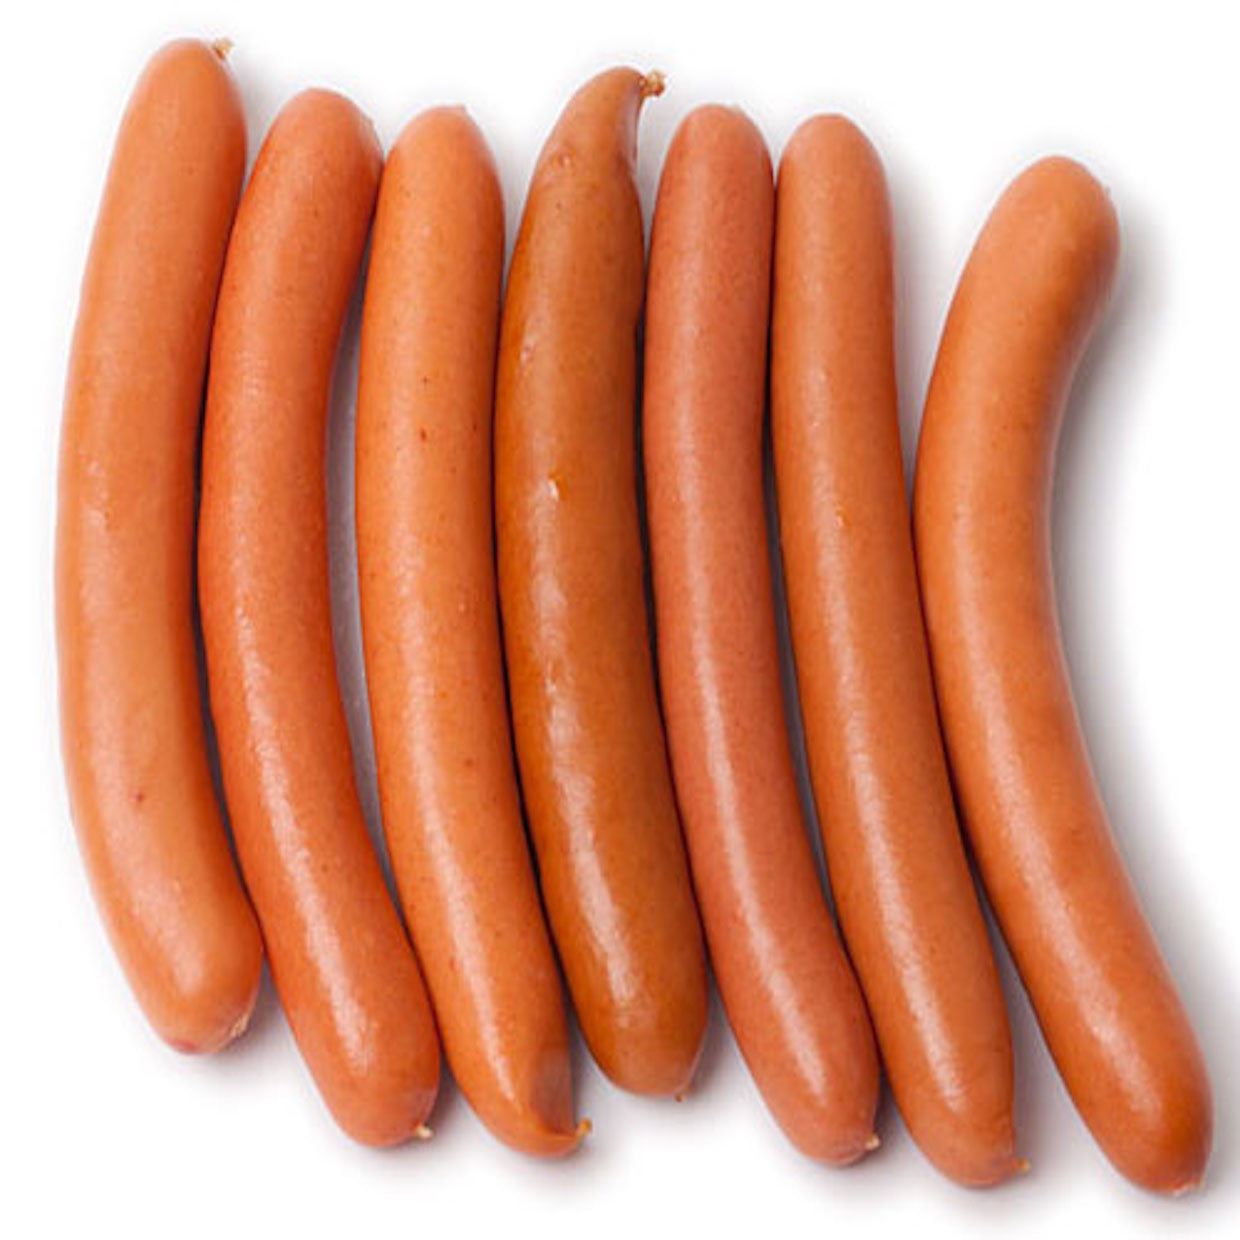 Pork / Beef Natural Hot Dogs (1-1.15 lb)